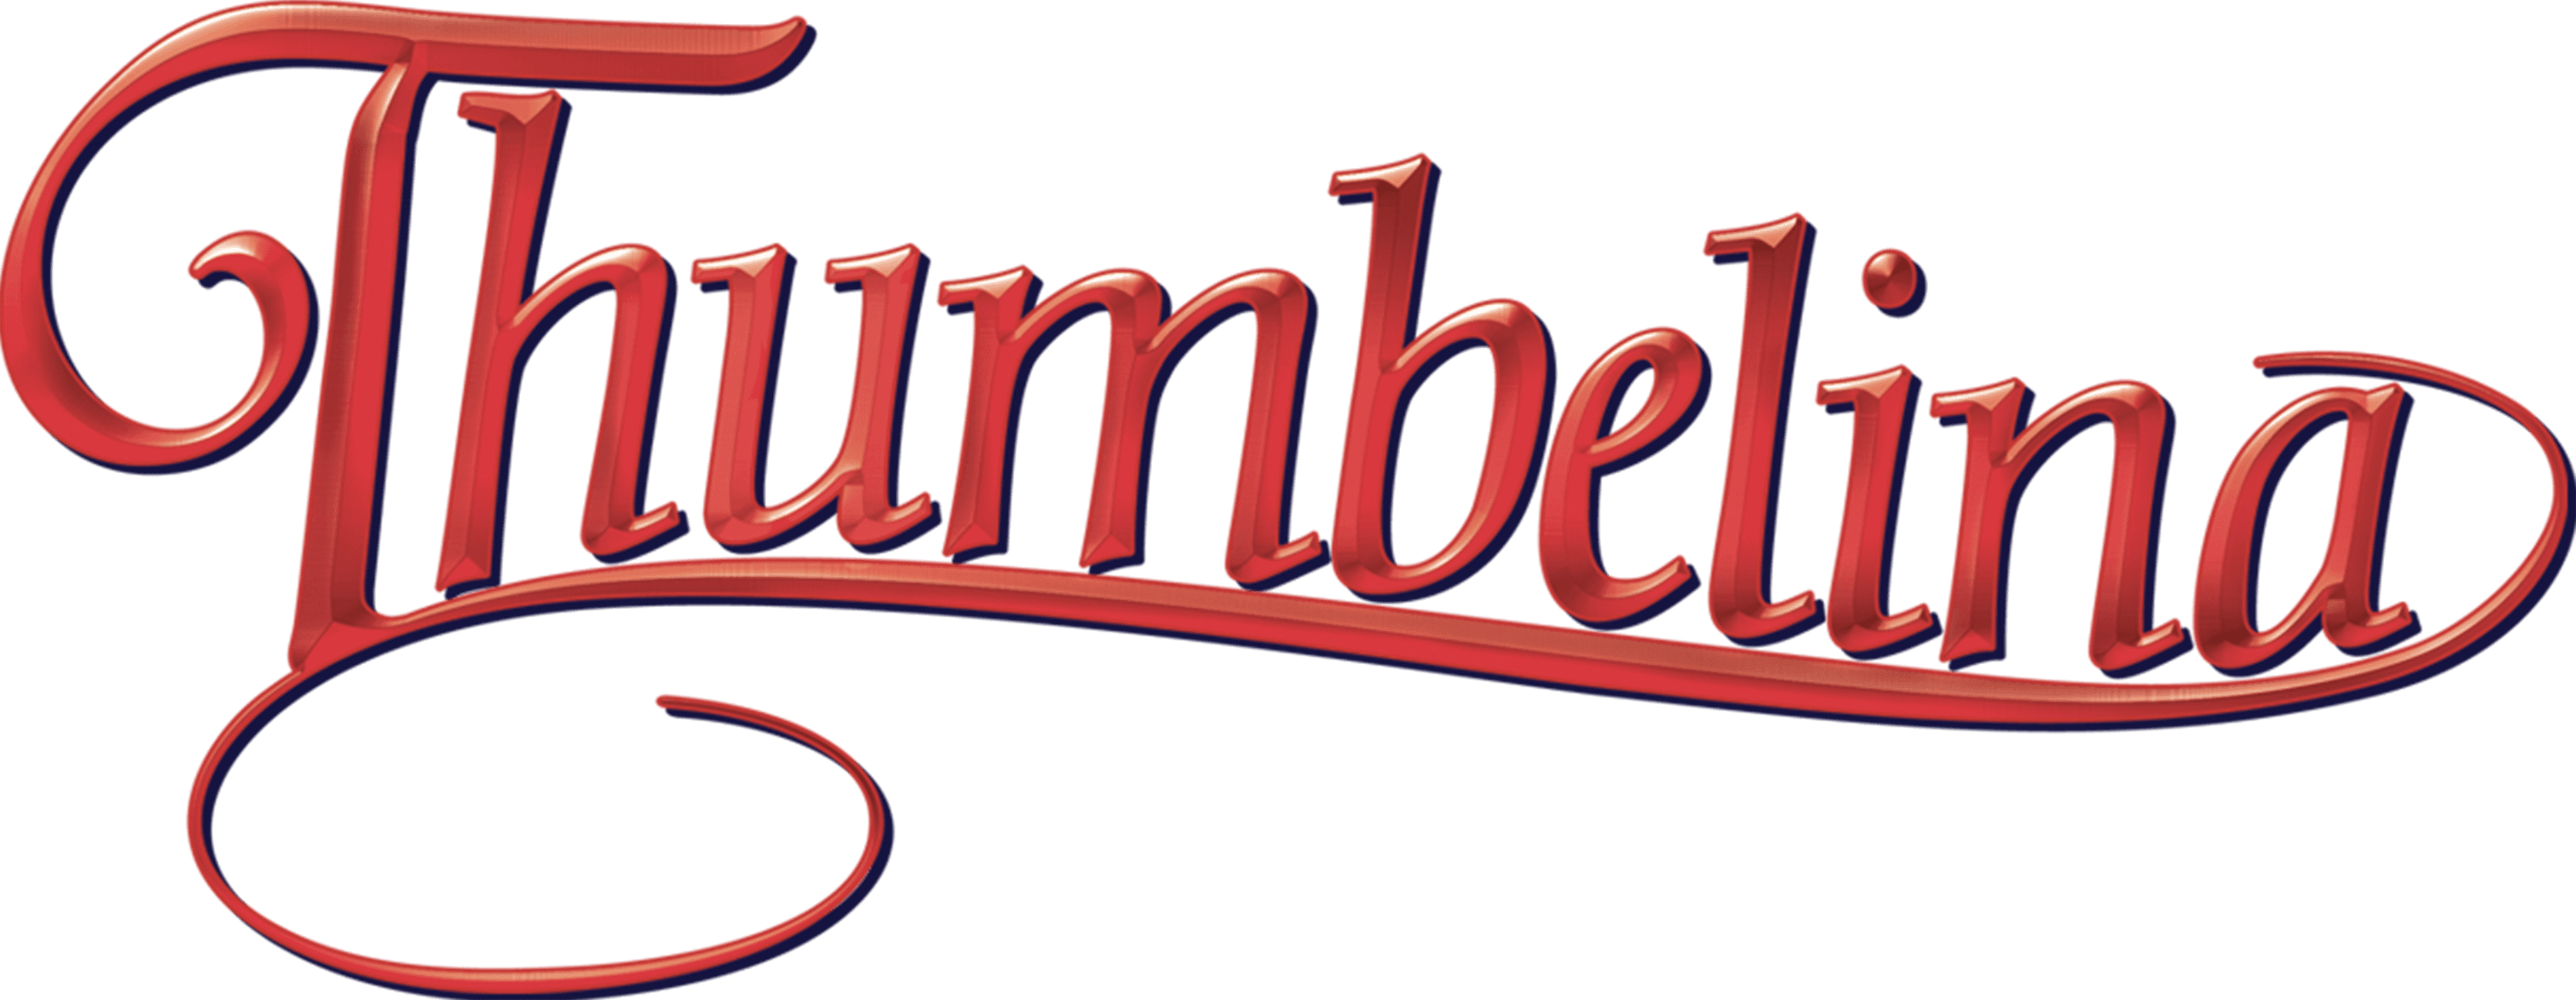 Thumbelina logo